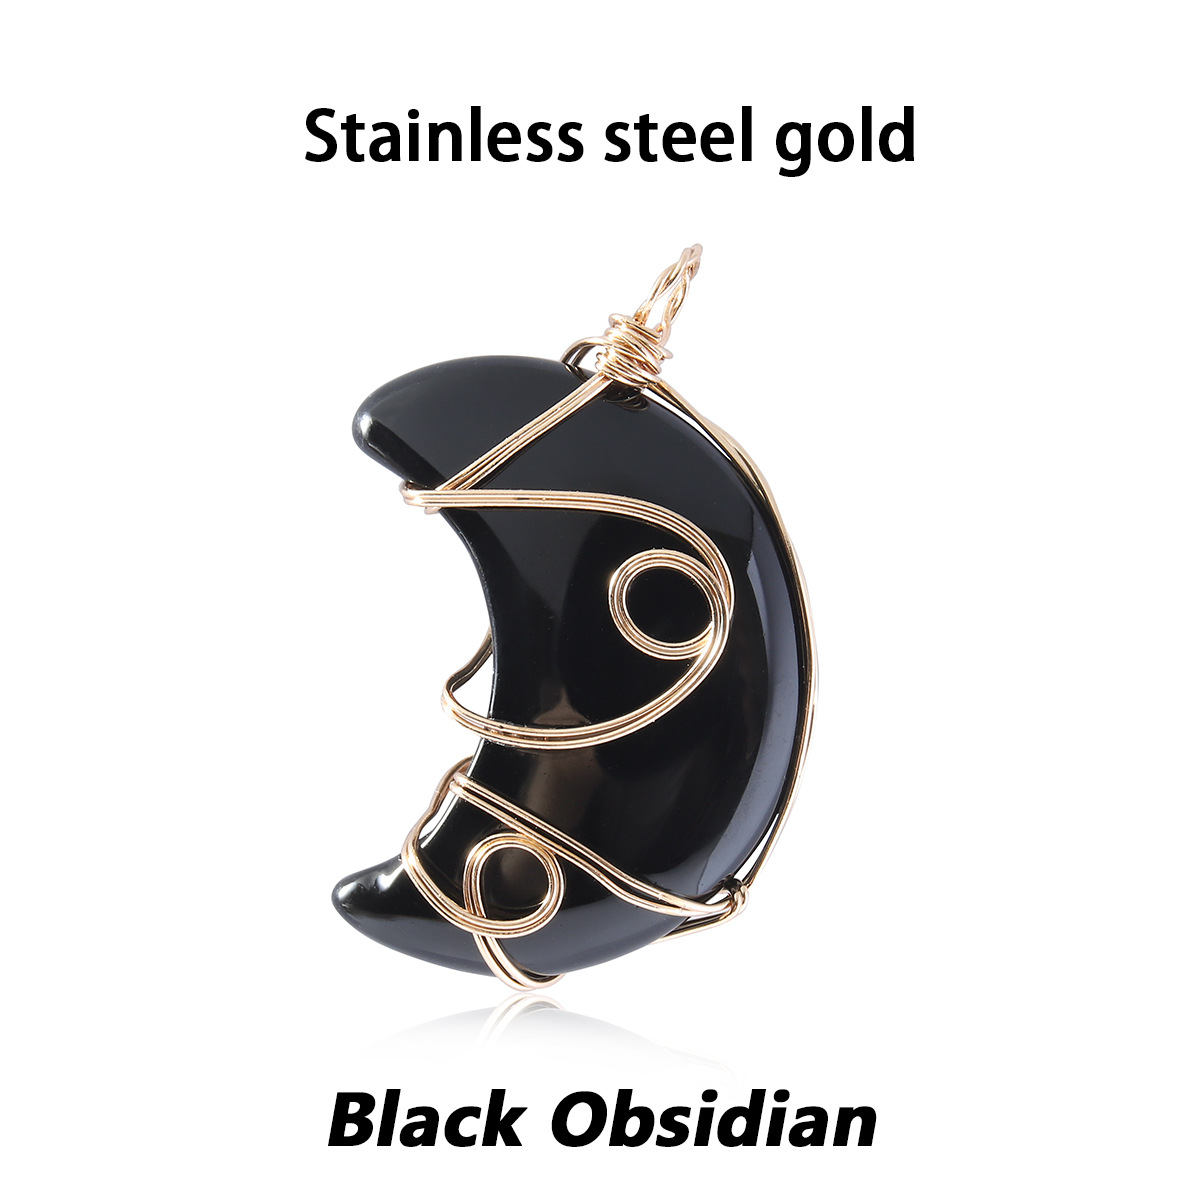 1 Black Obsidian gold